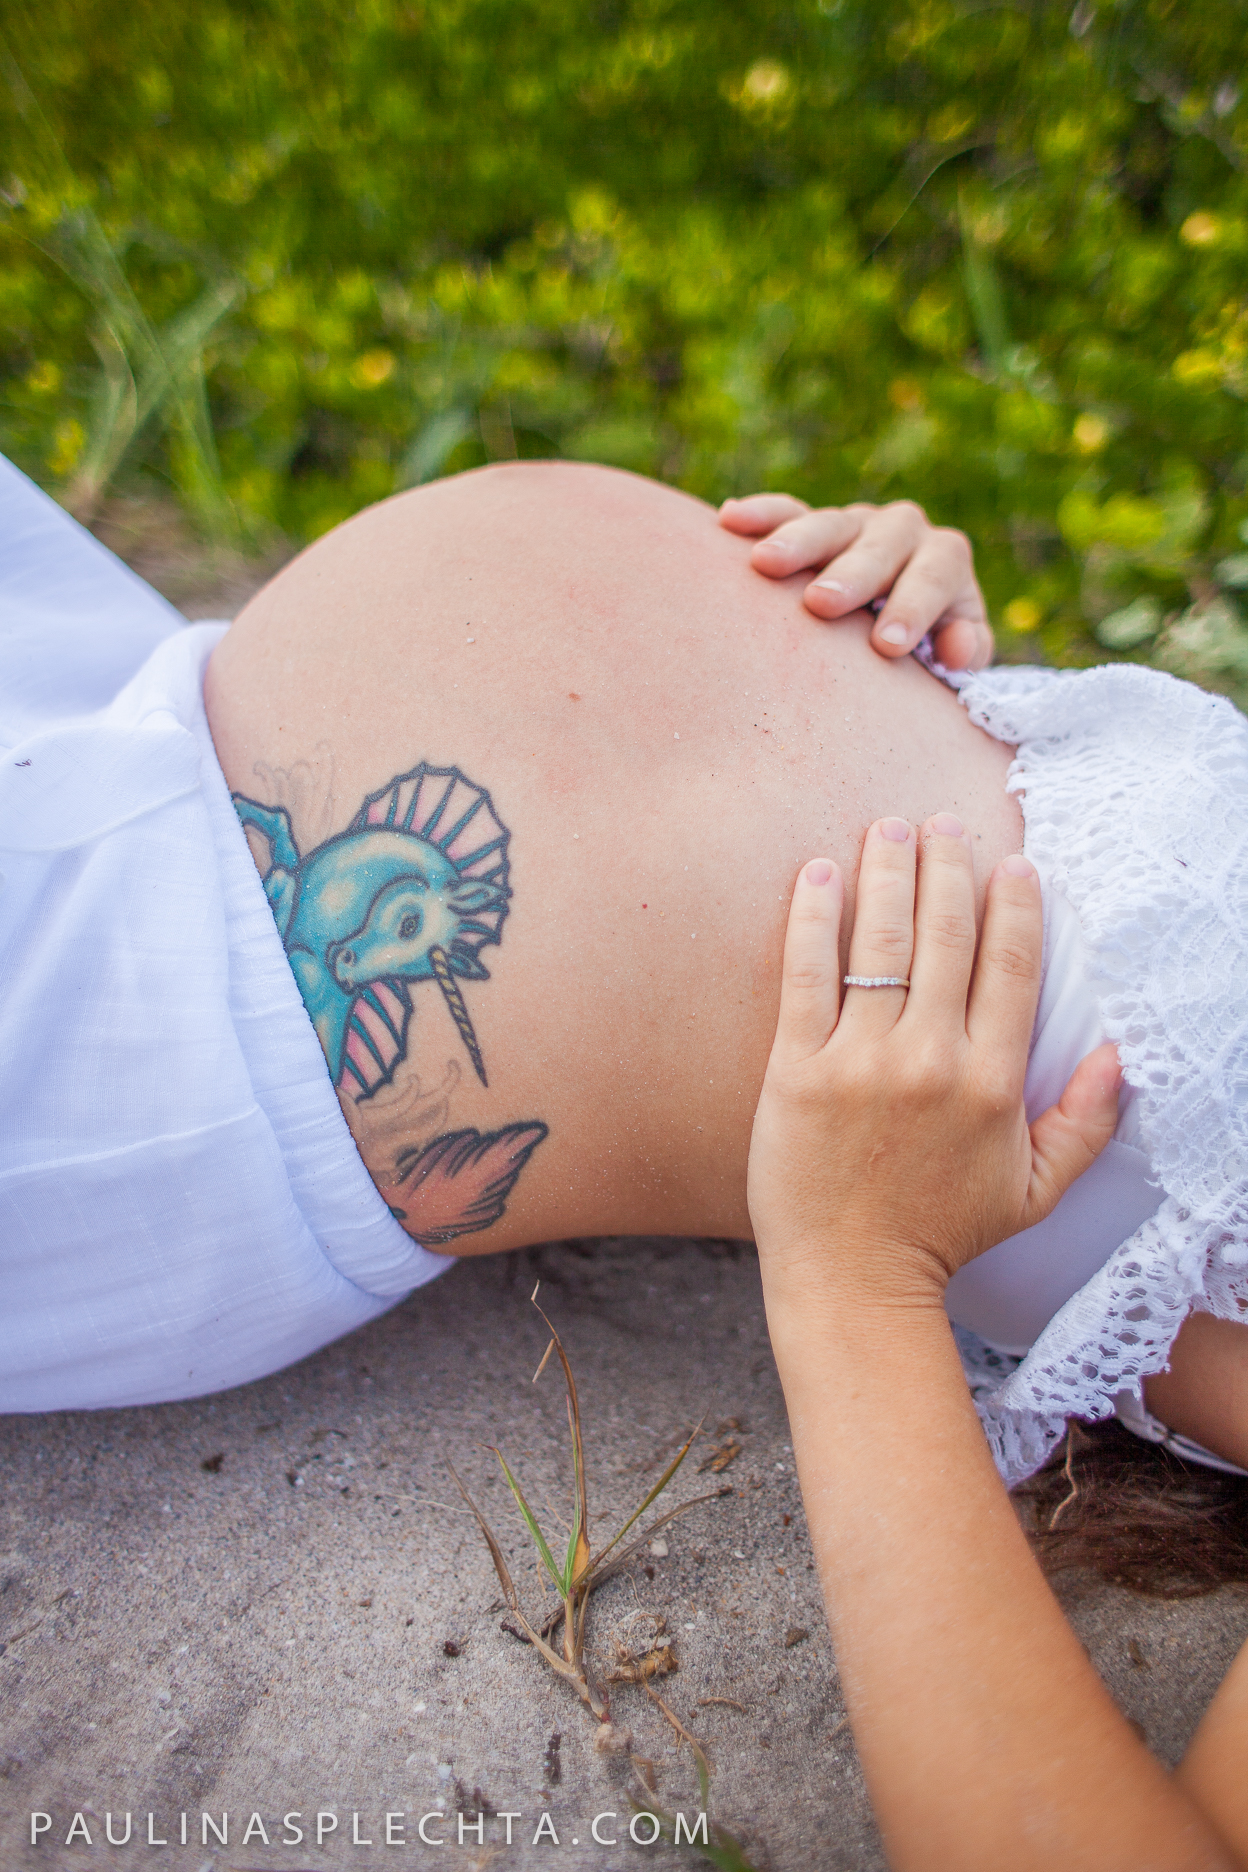 boca-raton-maternity-photographer-pregnancy-photos-shoot-ft-lauderdale-south-florida-gown-dress-newborn-west-palm-beach-delray-10.jpg